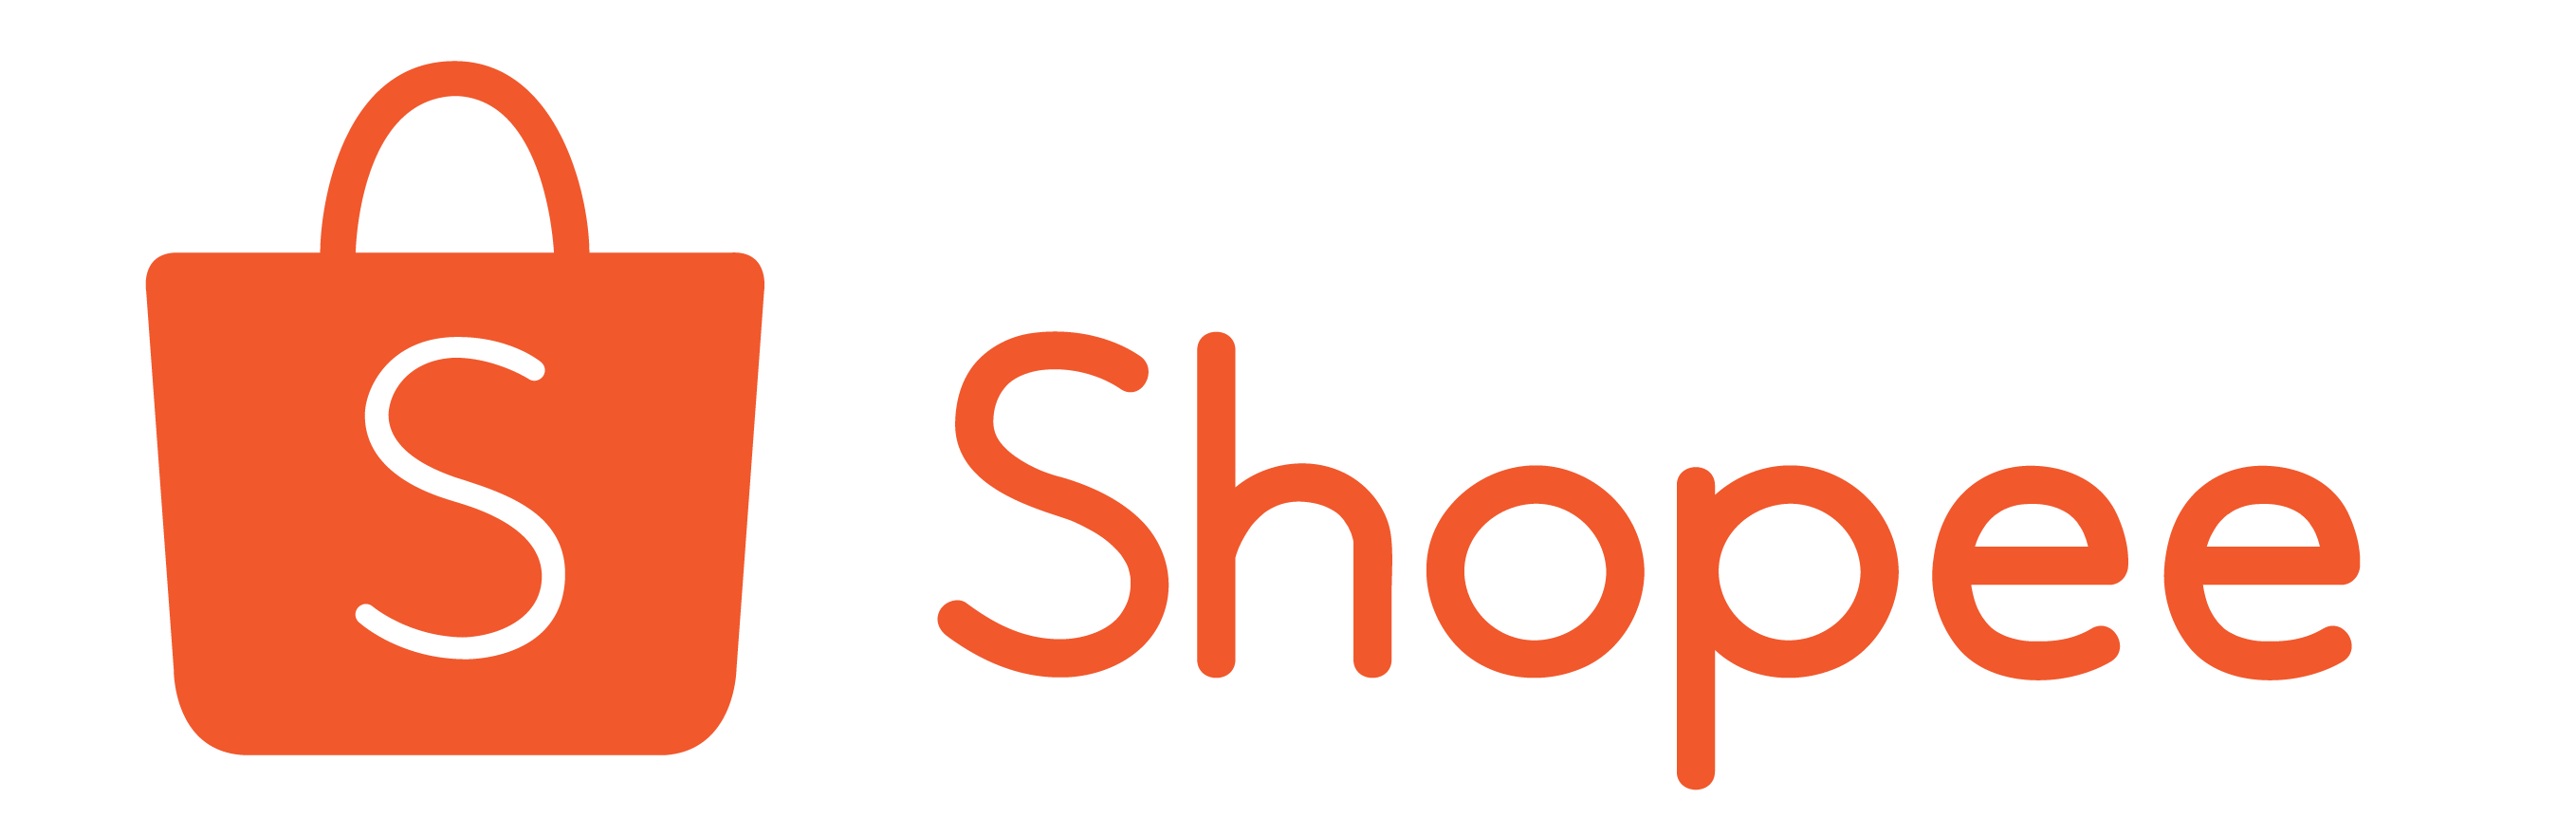 shopee logo digital economy forum mdcc